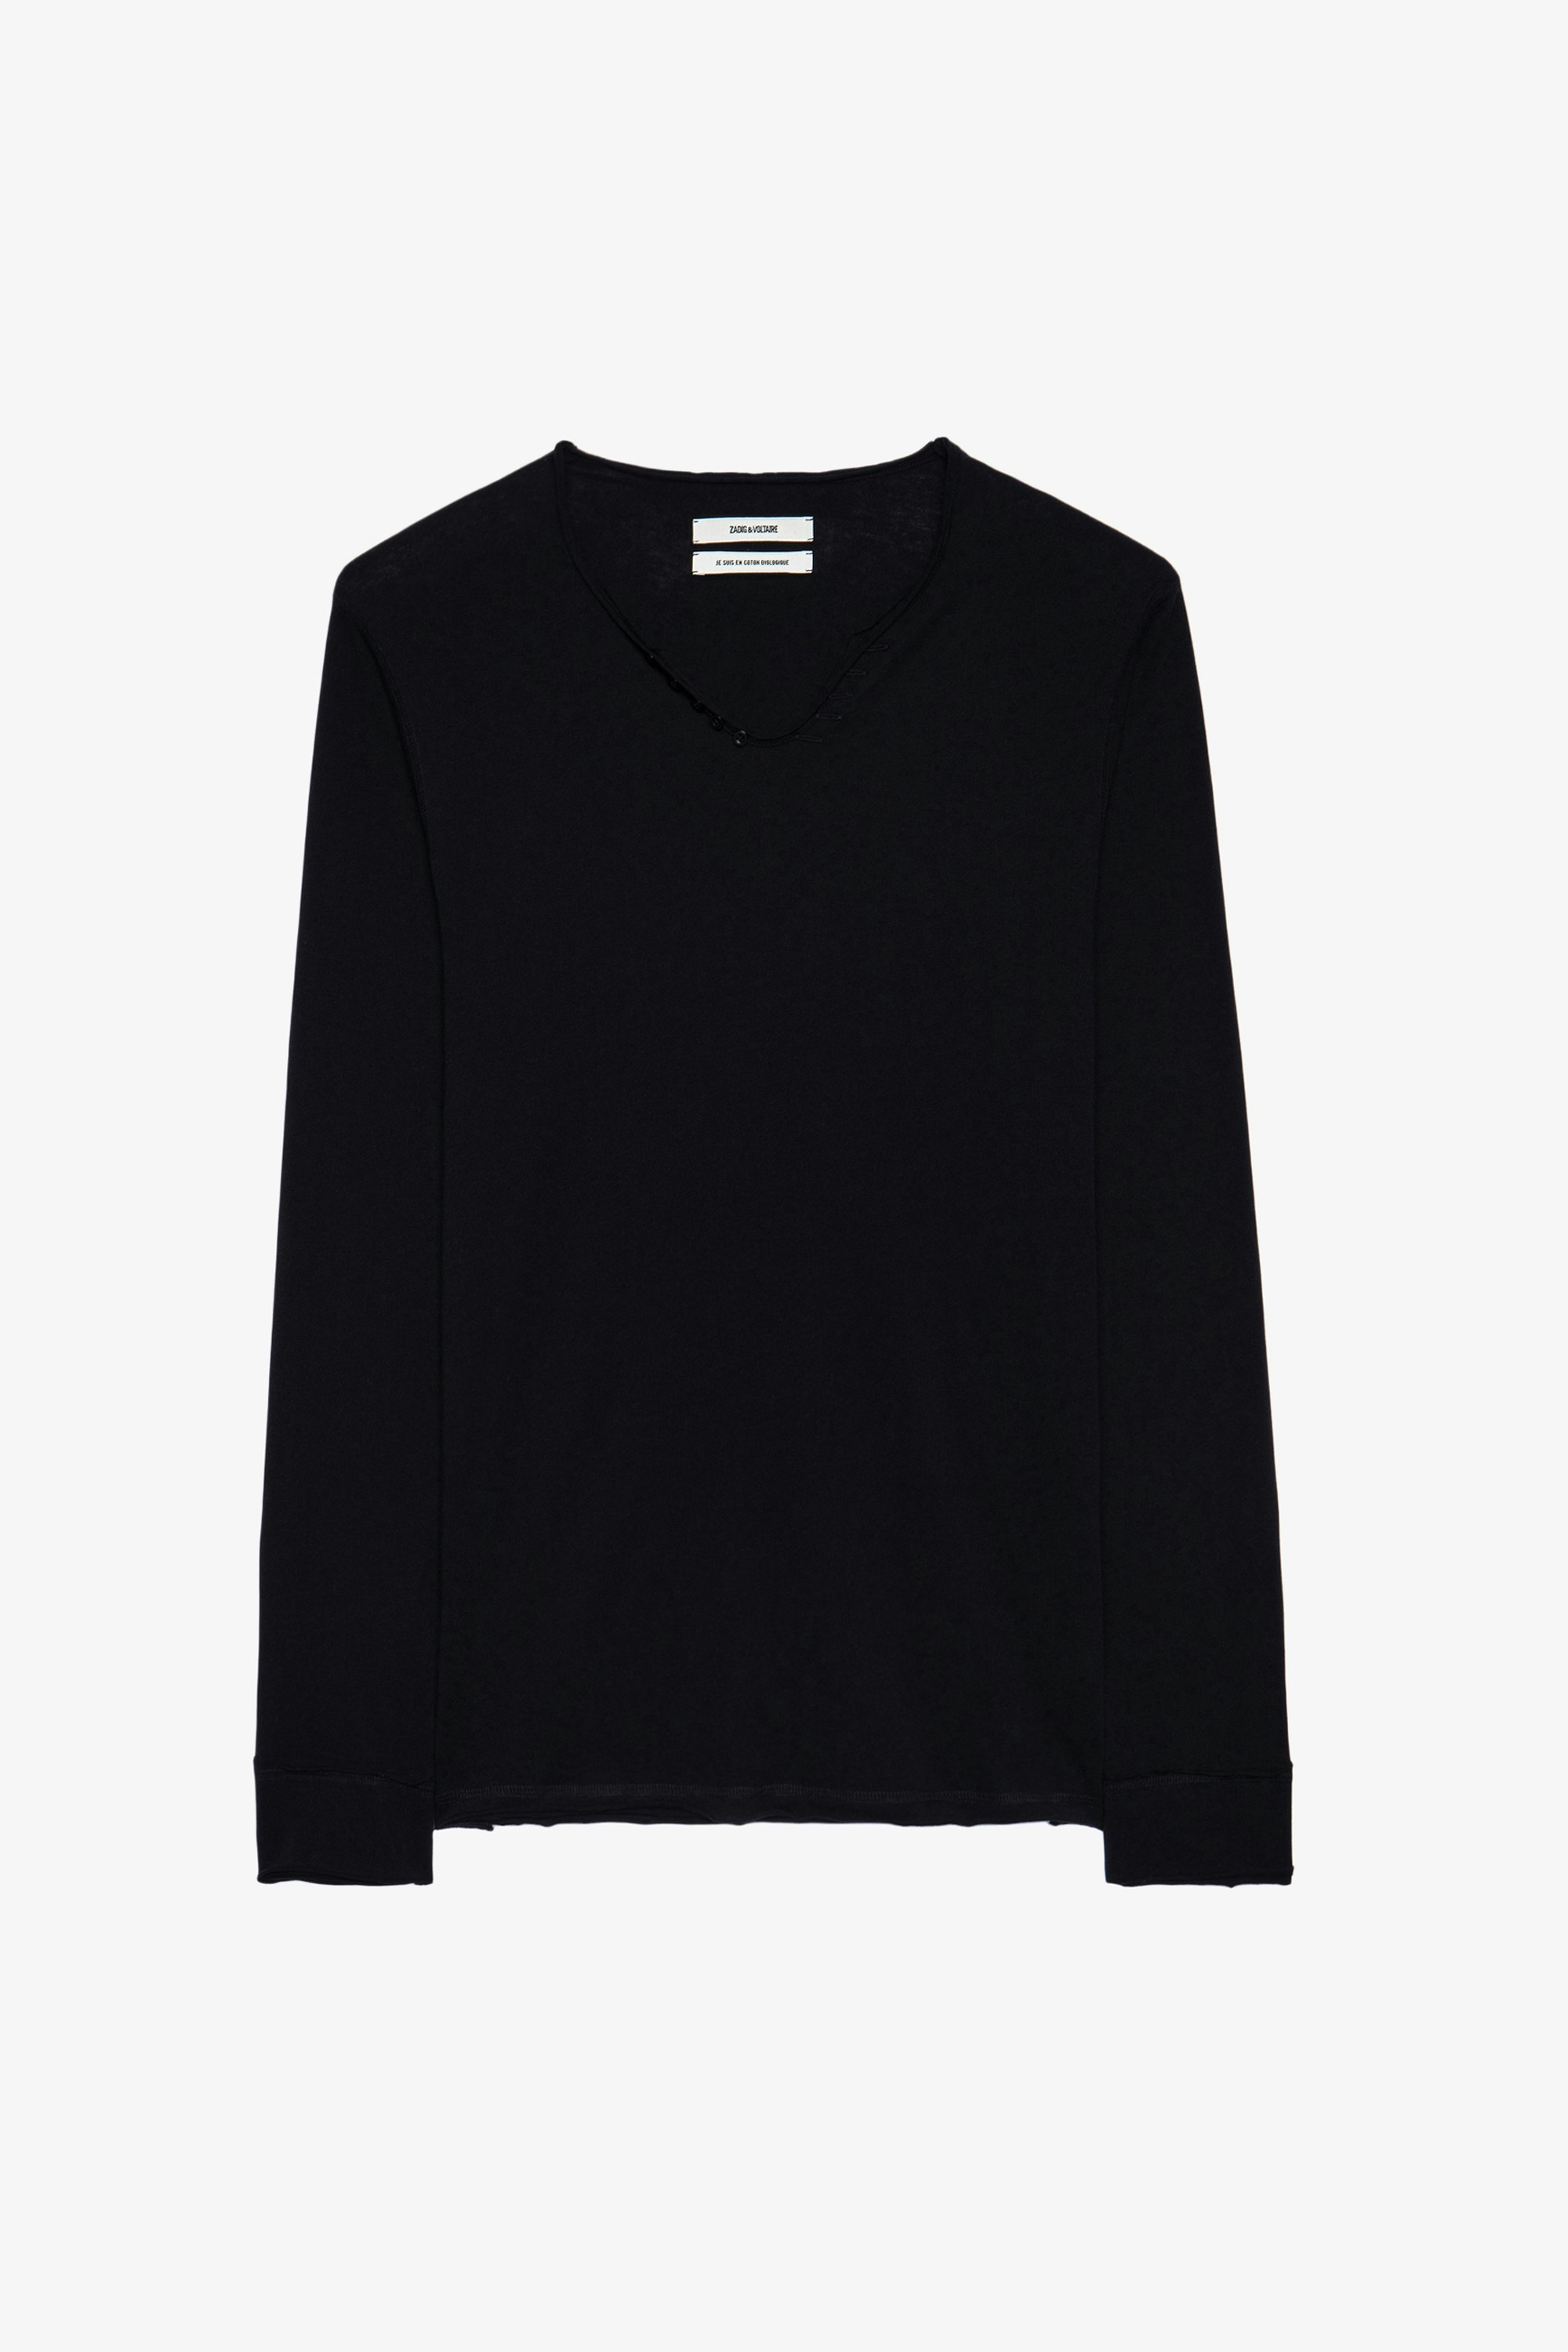 Monastir Ｔシャツ - Men’s black cotton henley T-shirt